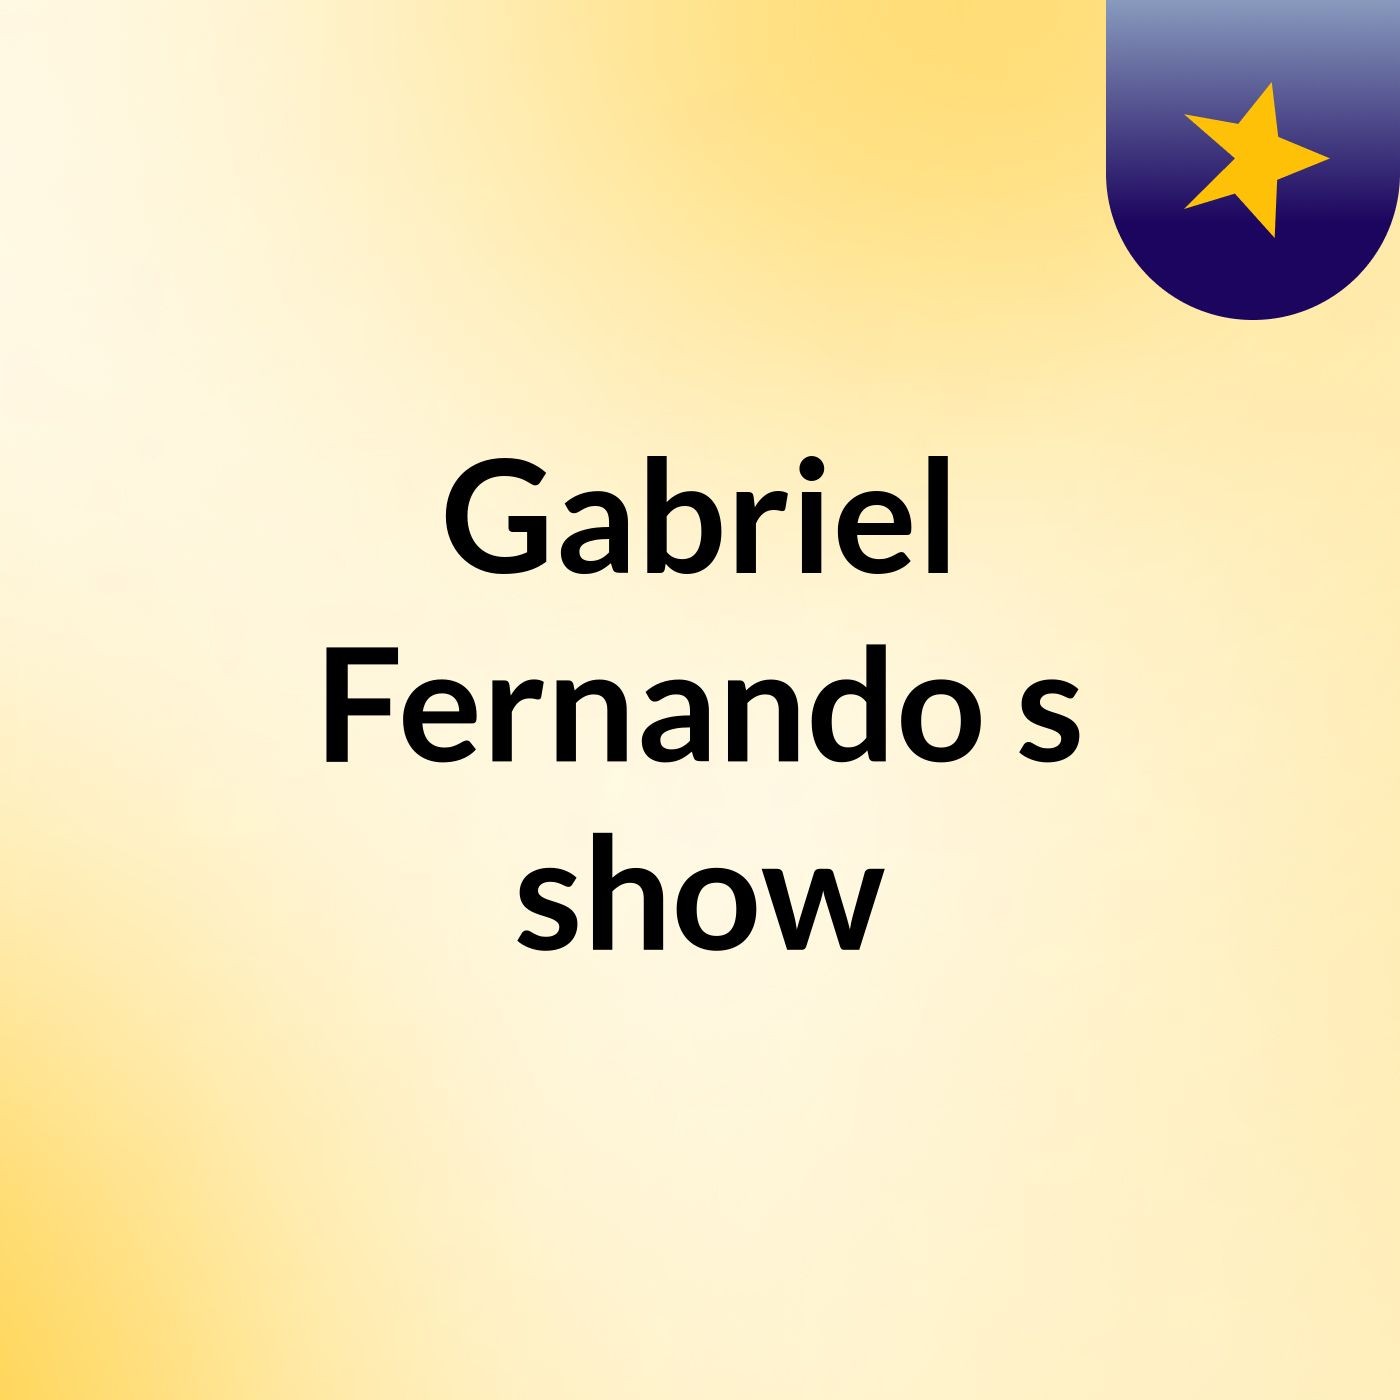 Gabriel Fernando's show